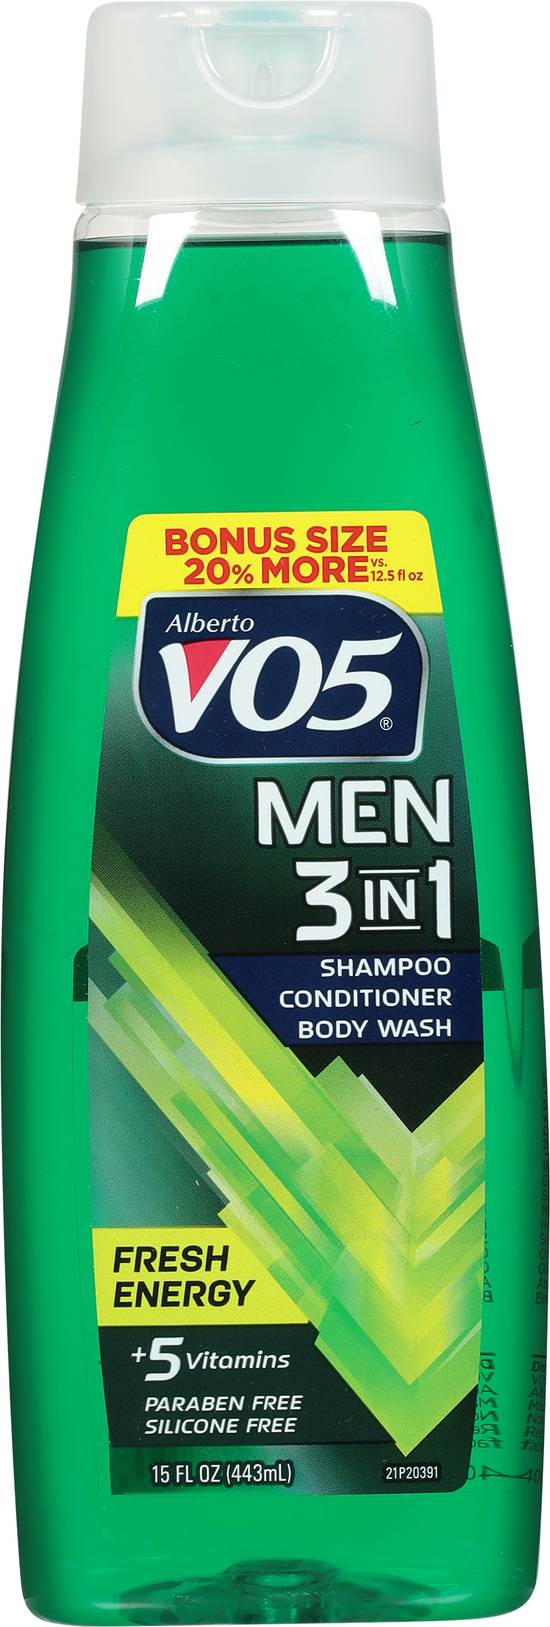 Alberto Vo5 Men Fresh Energy 3 in 1 Shampoo Conditioner Body Wash